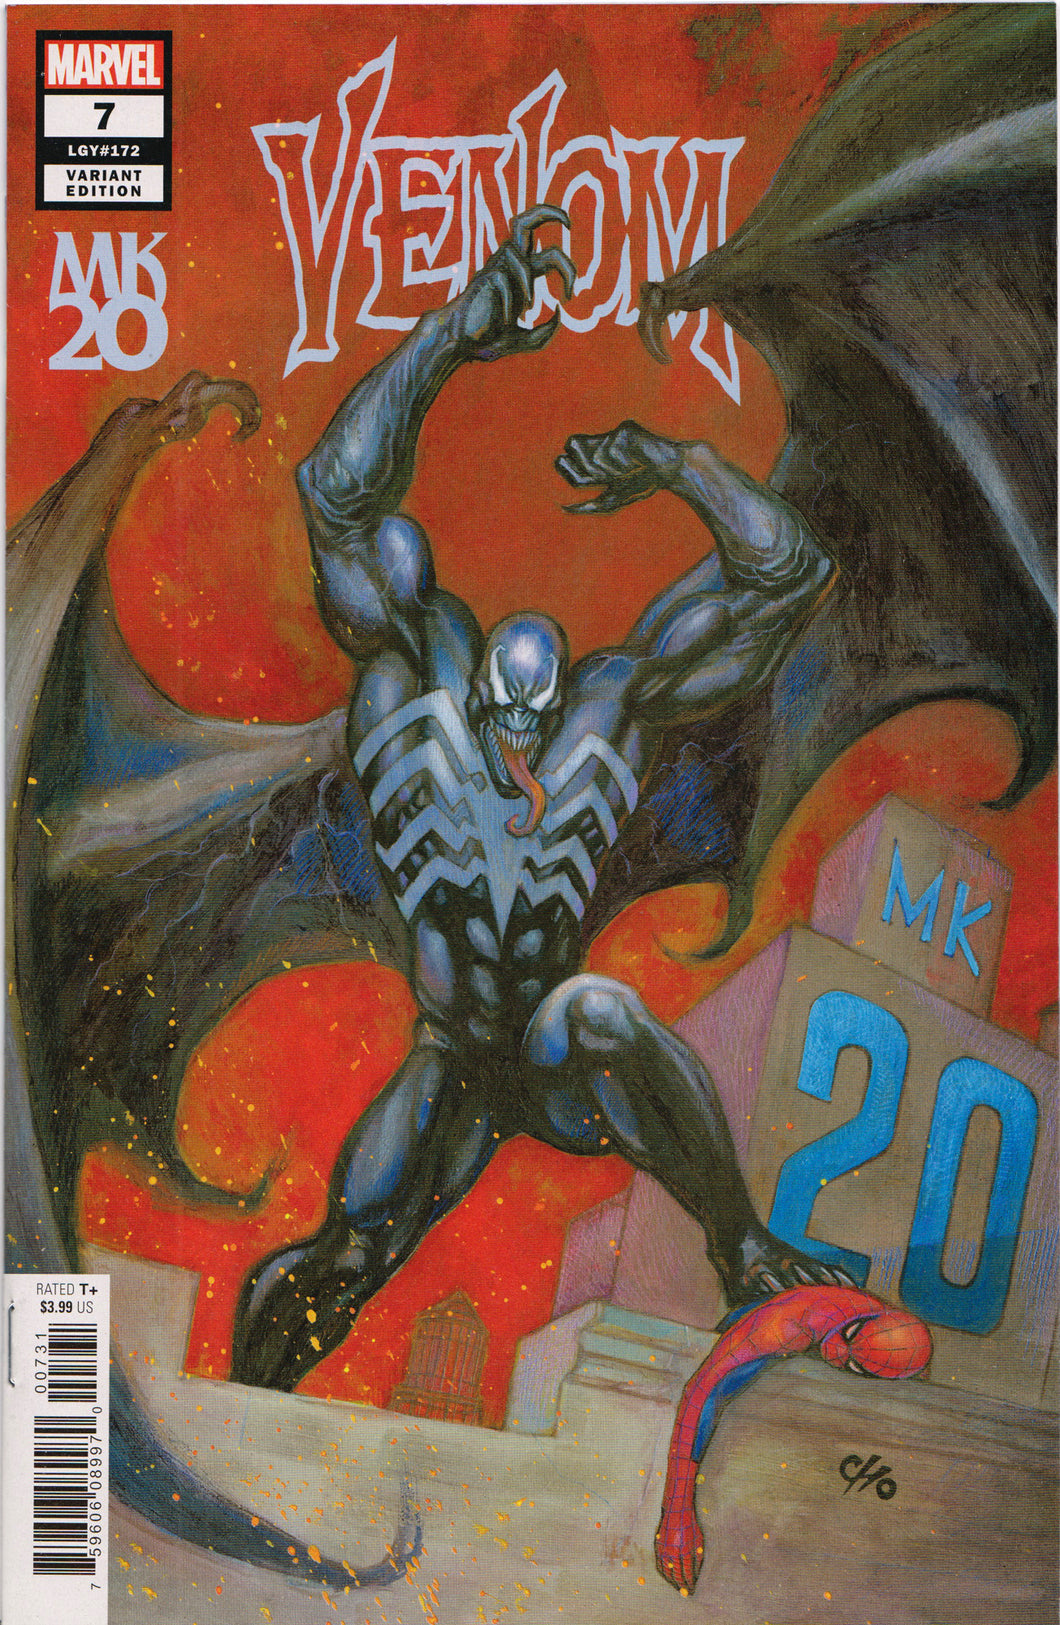 VENOM #7 (MK20 VARIANT) COMIC BOOK ~ Marvel Comics